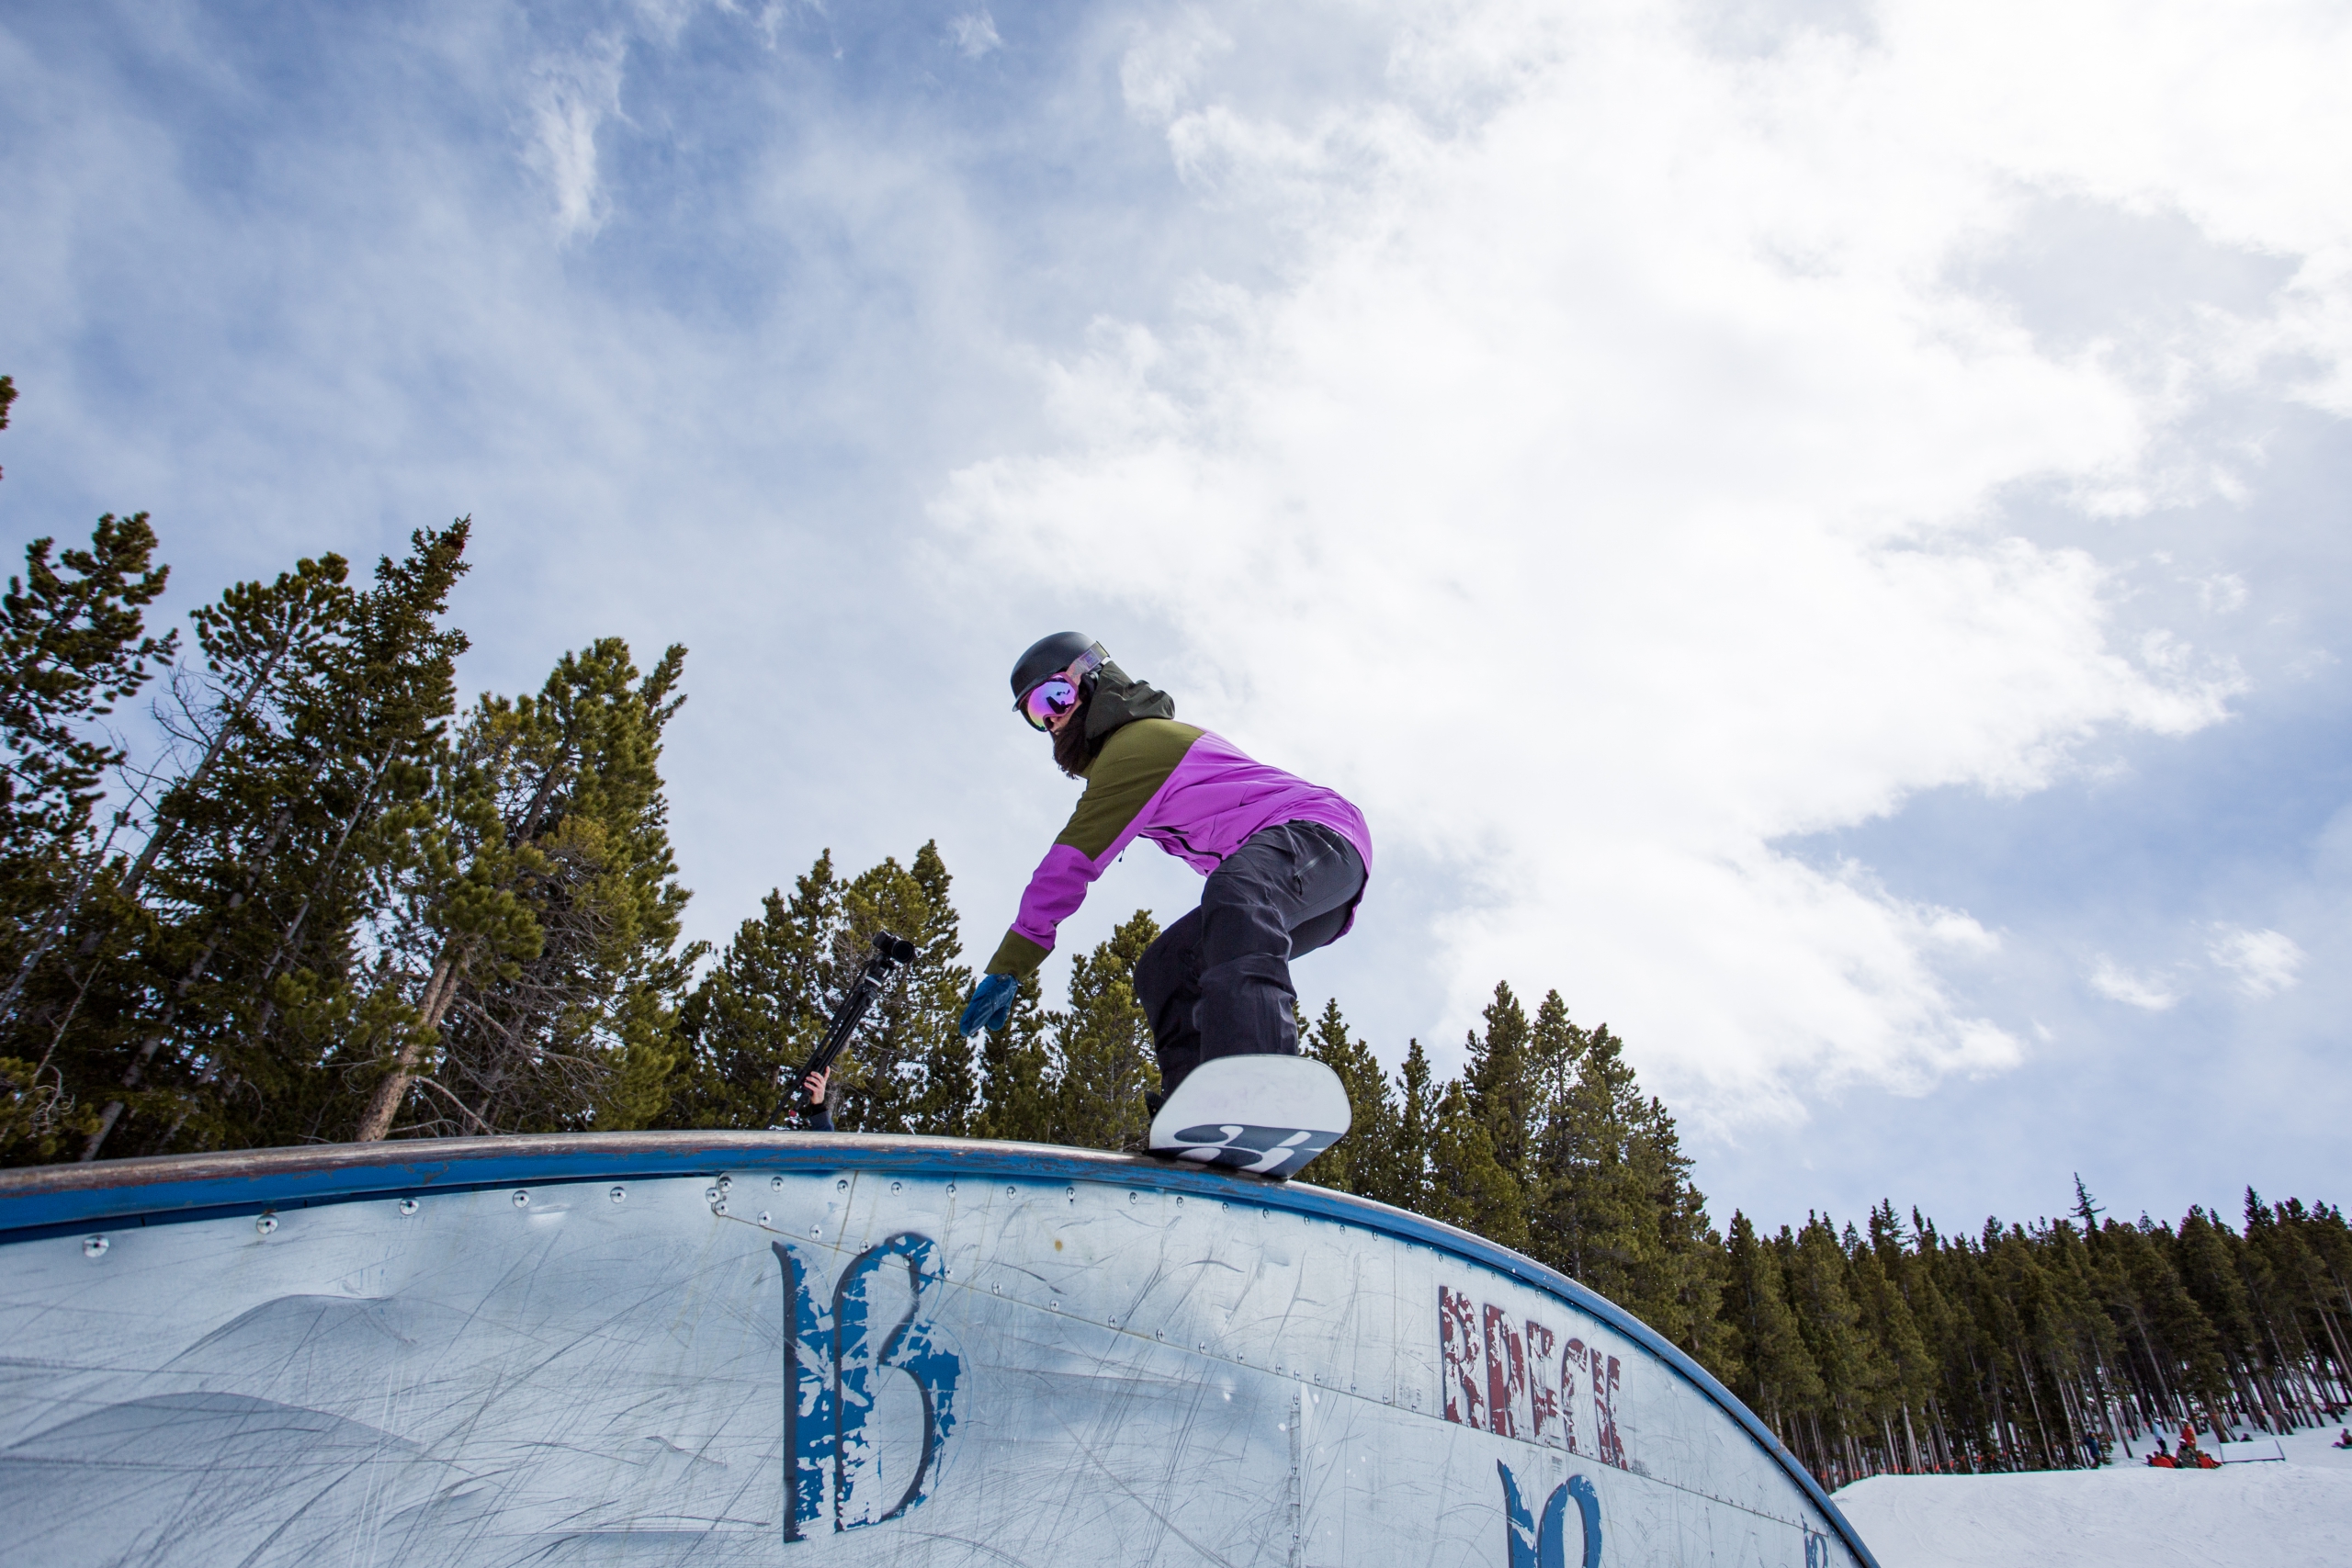 Christina Bruno snowboards a rainbow rail